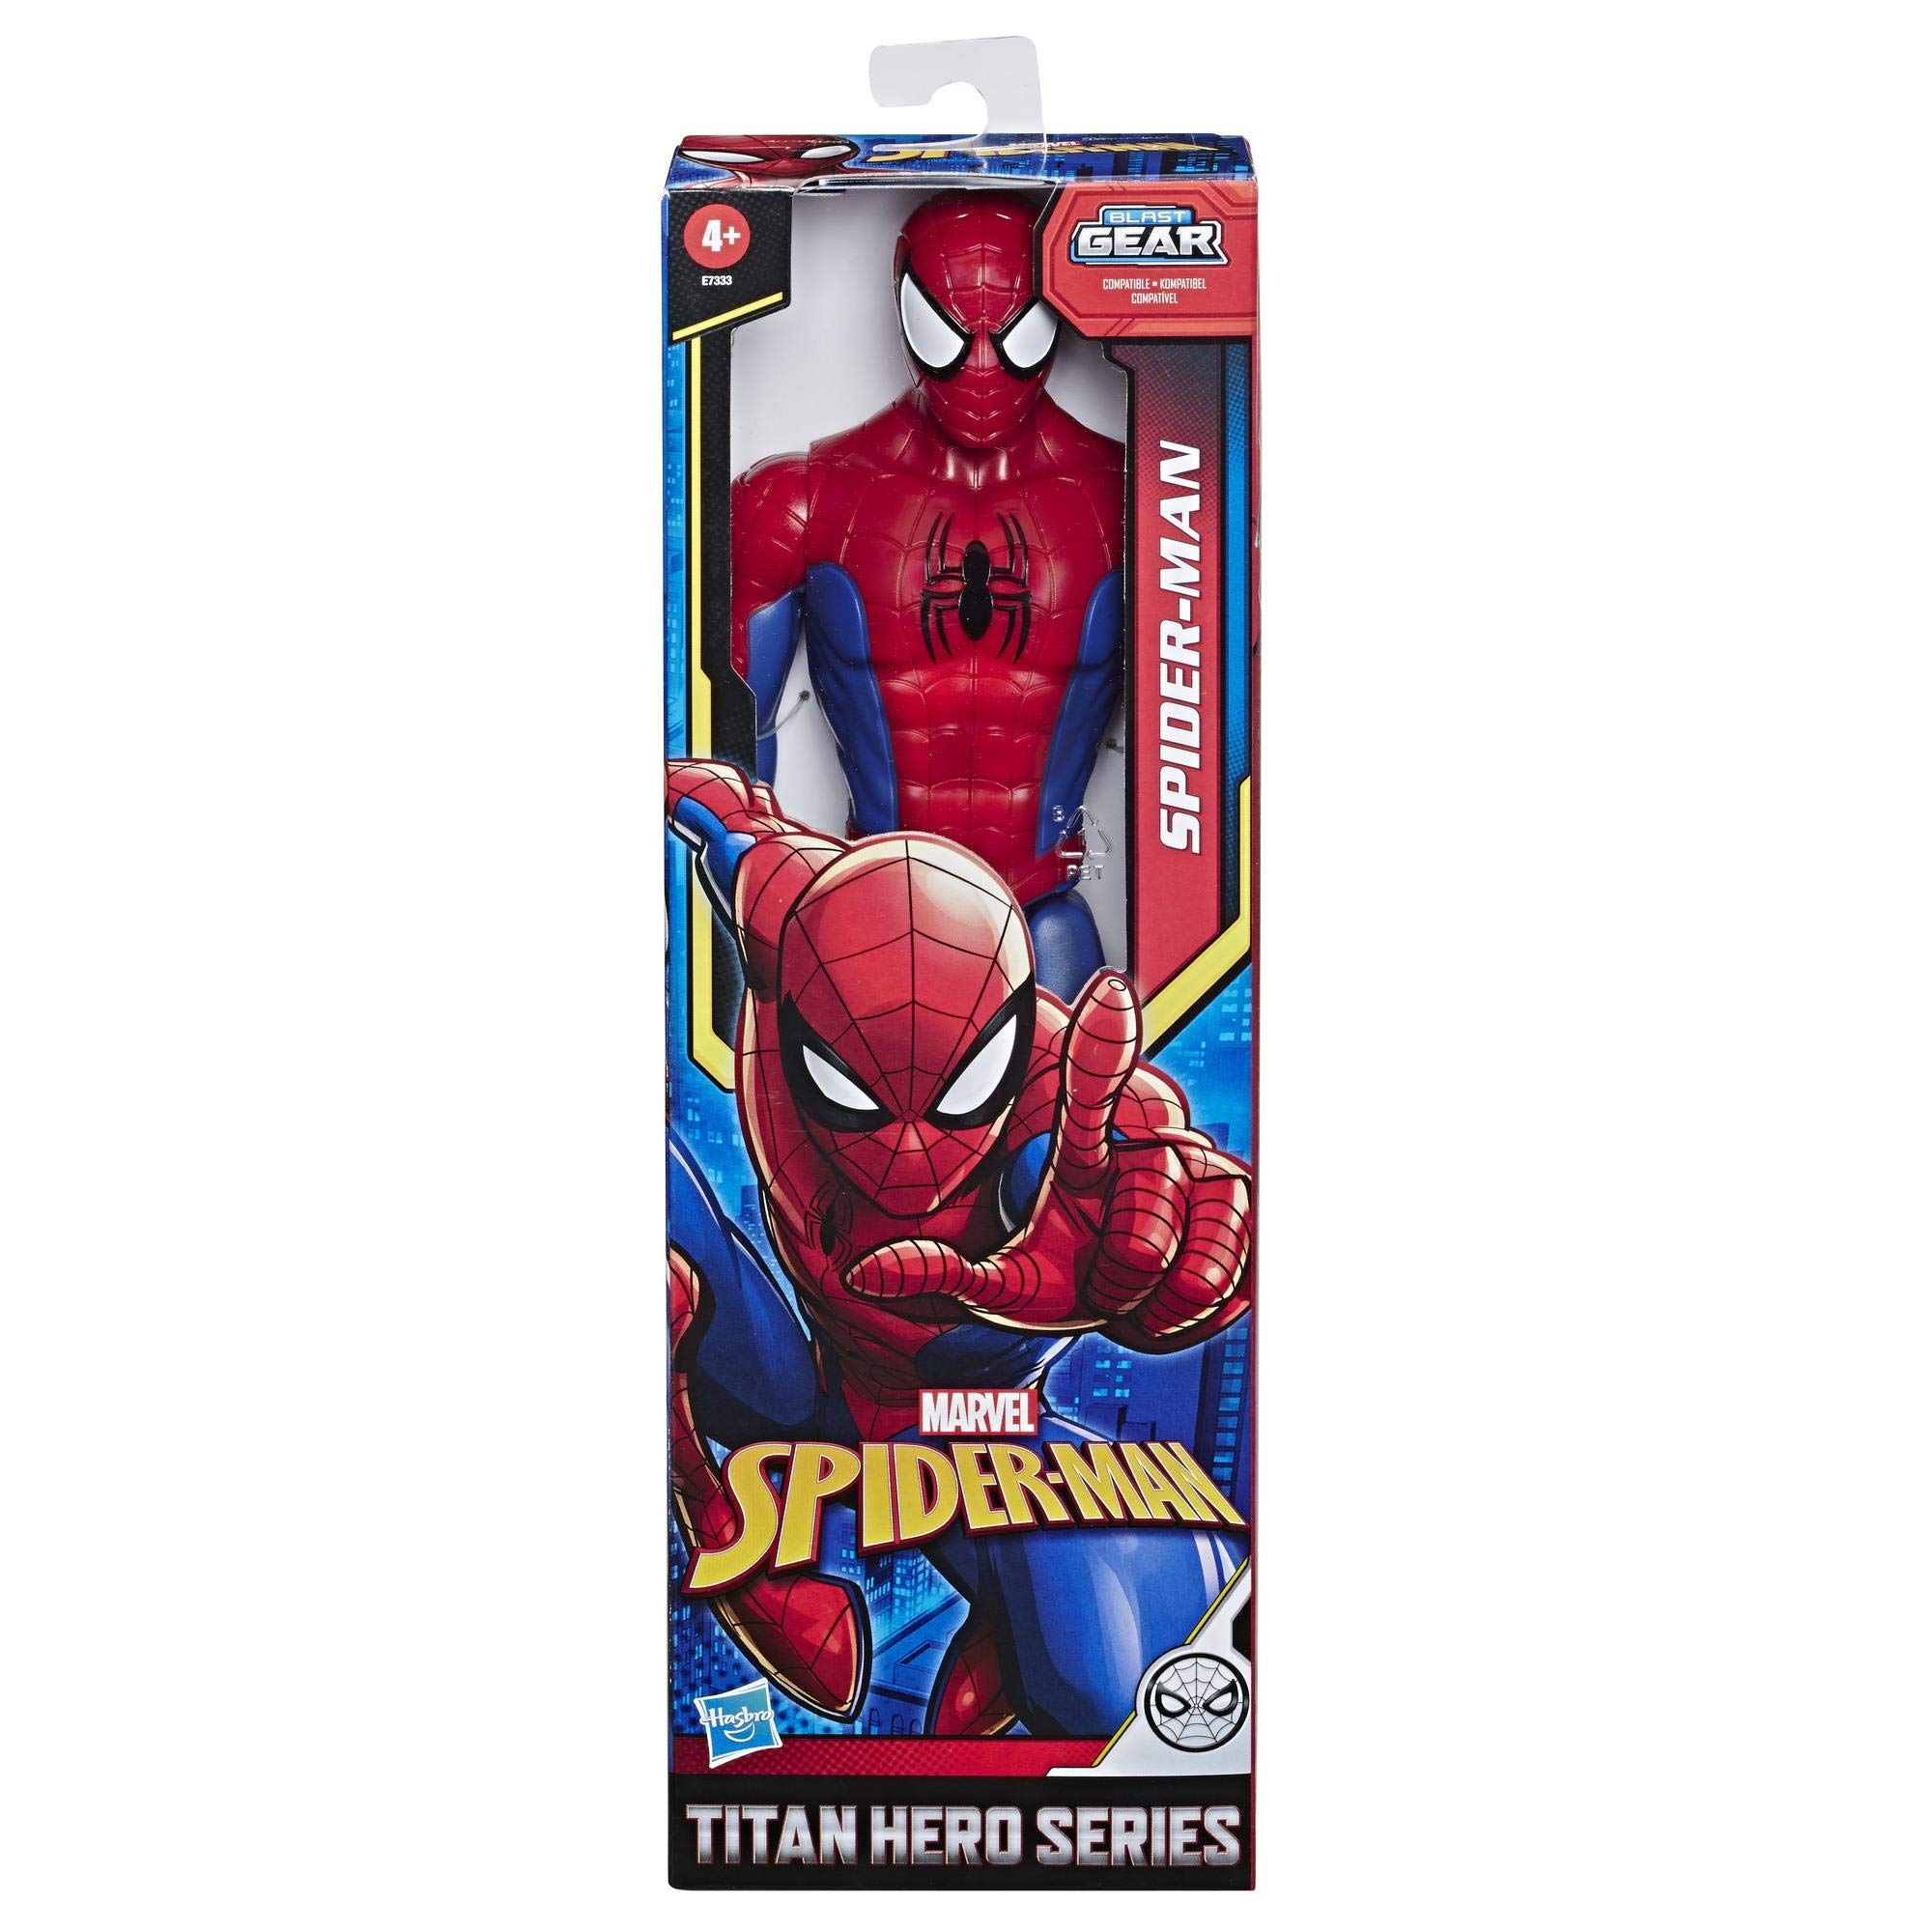 Spider-Man Marvel Titan Hero Series Spider-Man 12' Action Figure with Fx Port - Red/Blue